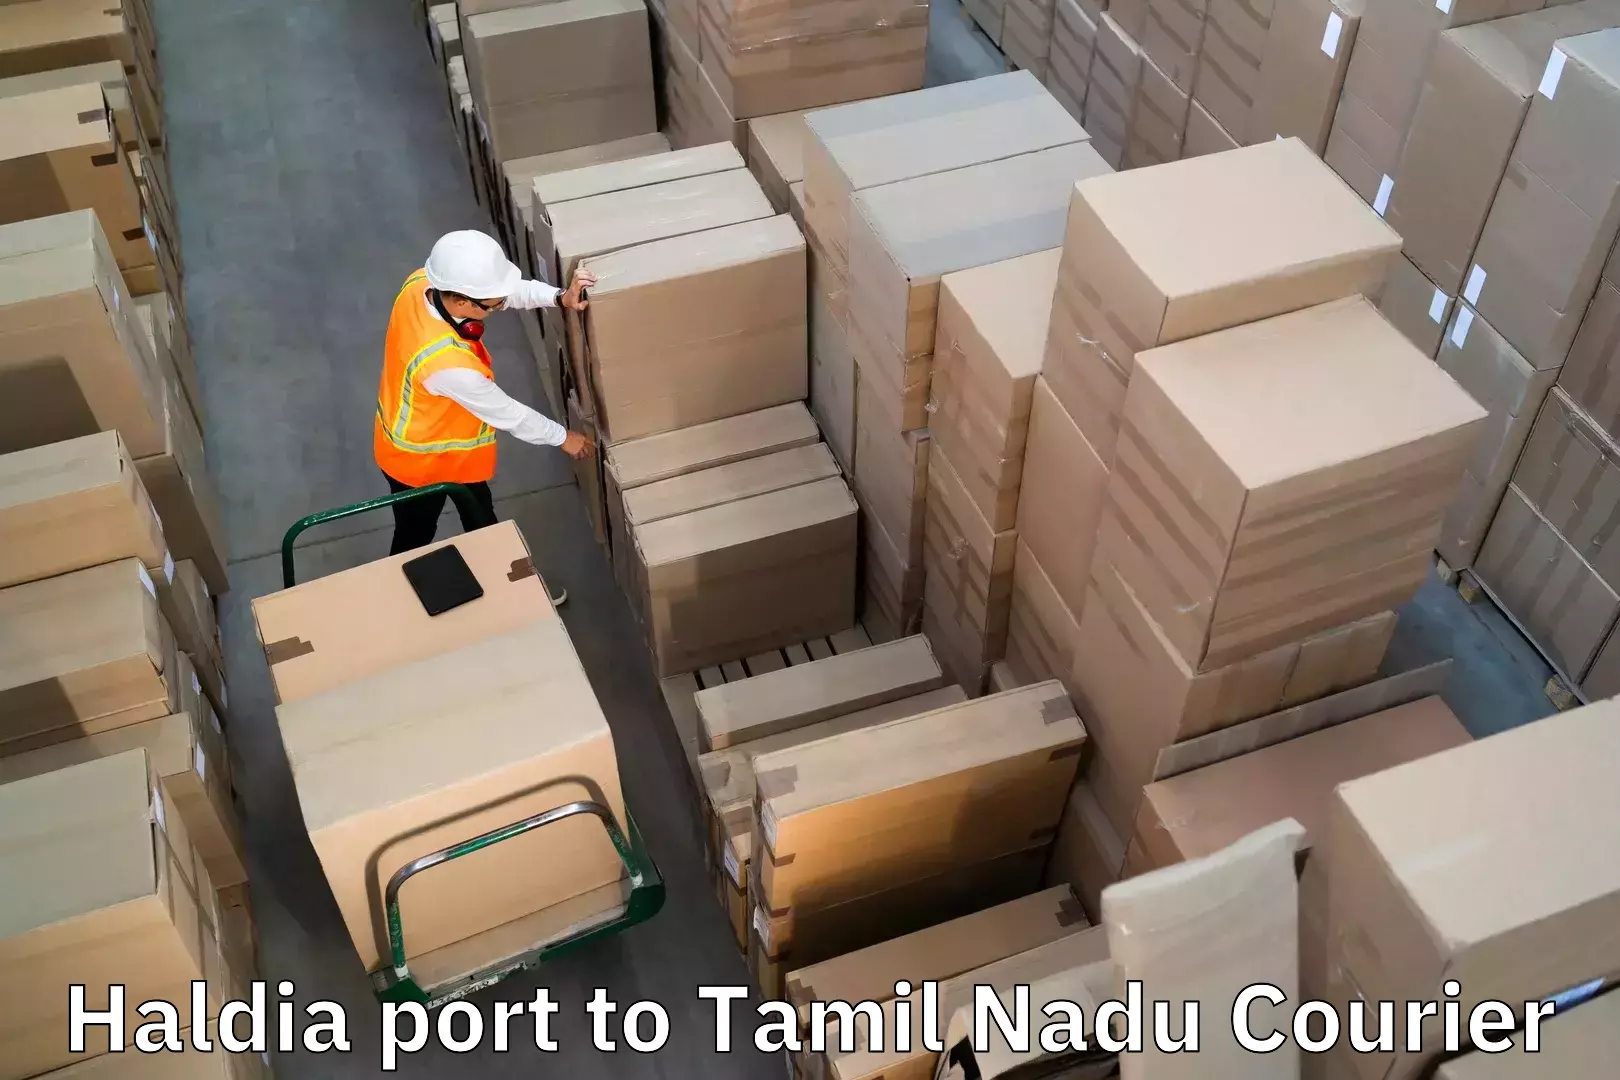 Baggage transport scheduler Haldia port to Tamil Nadu